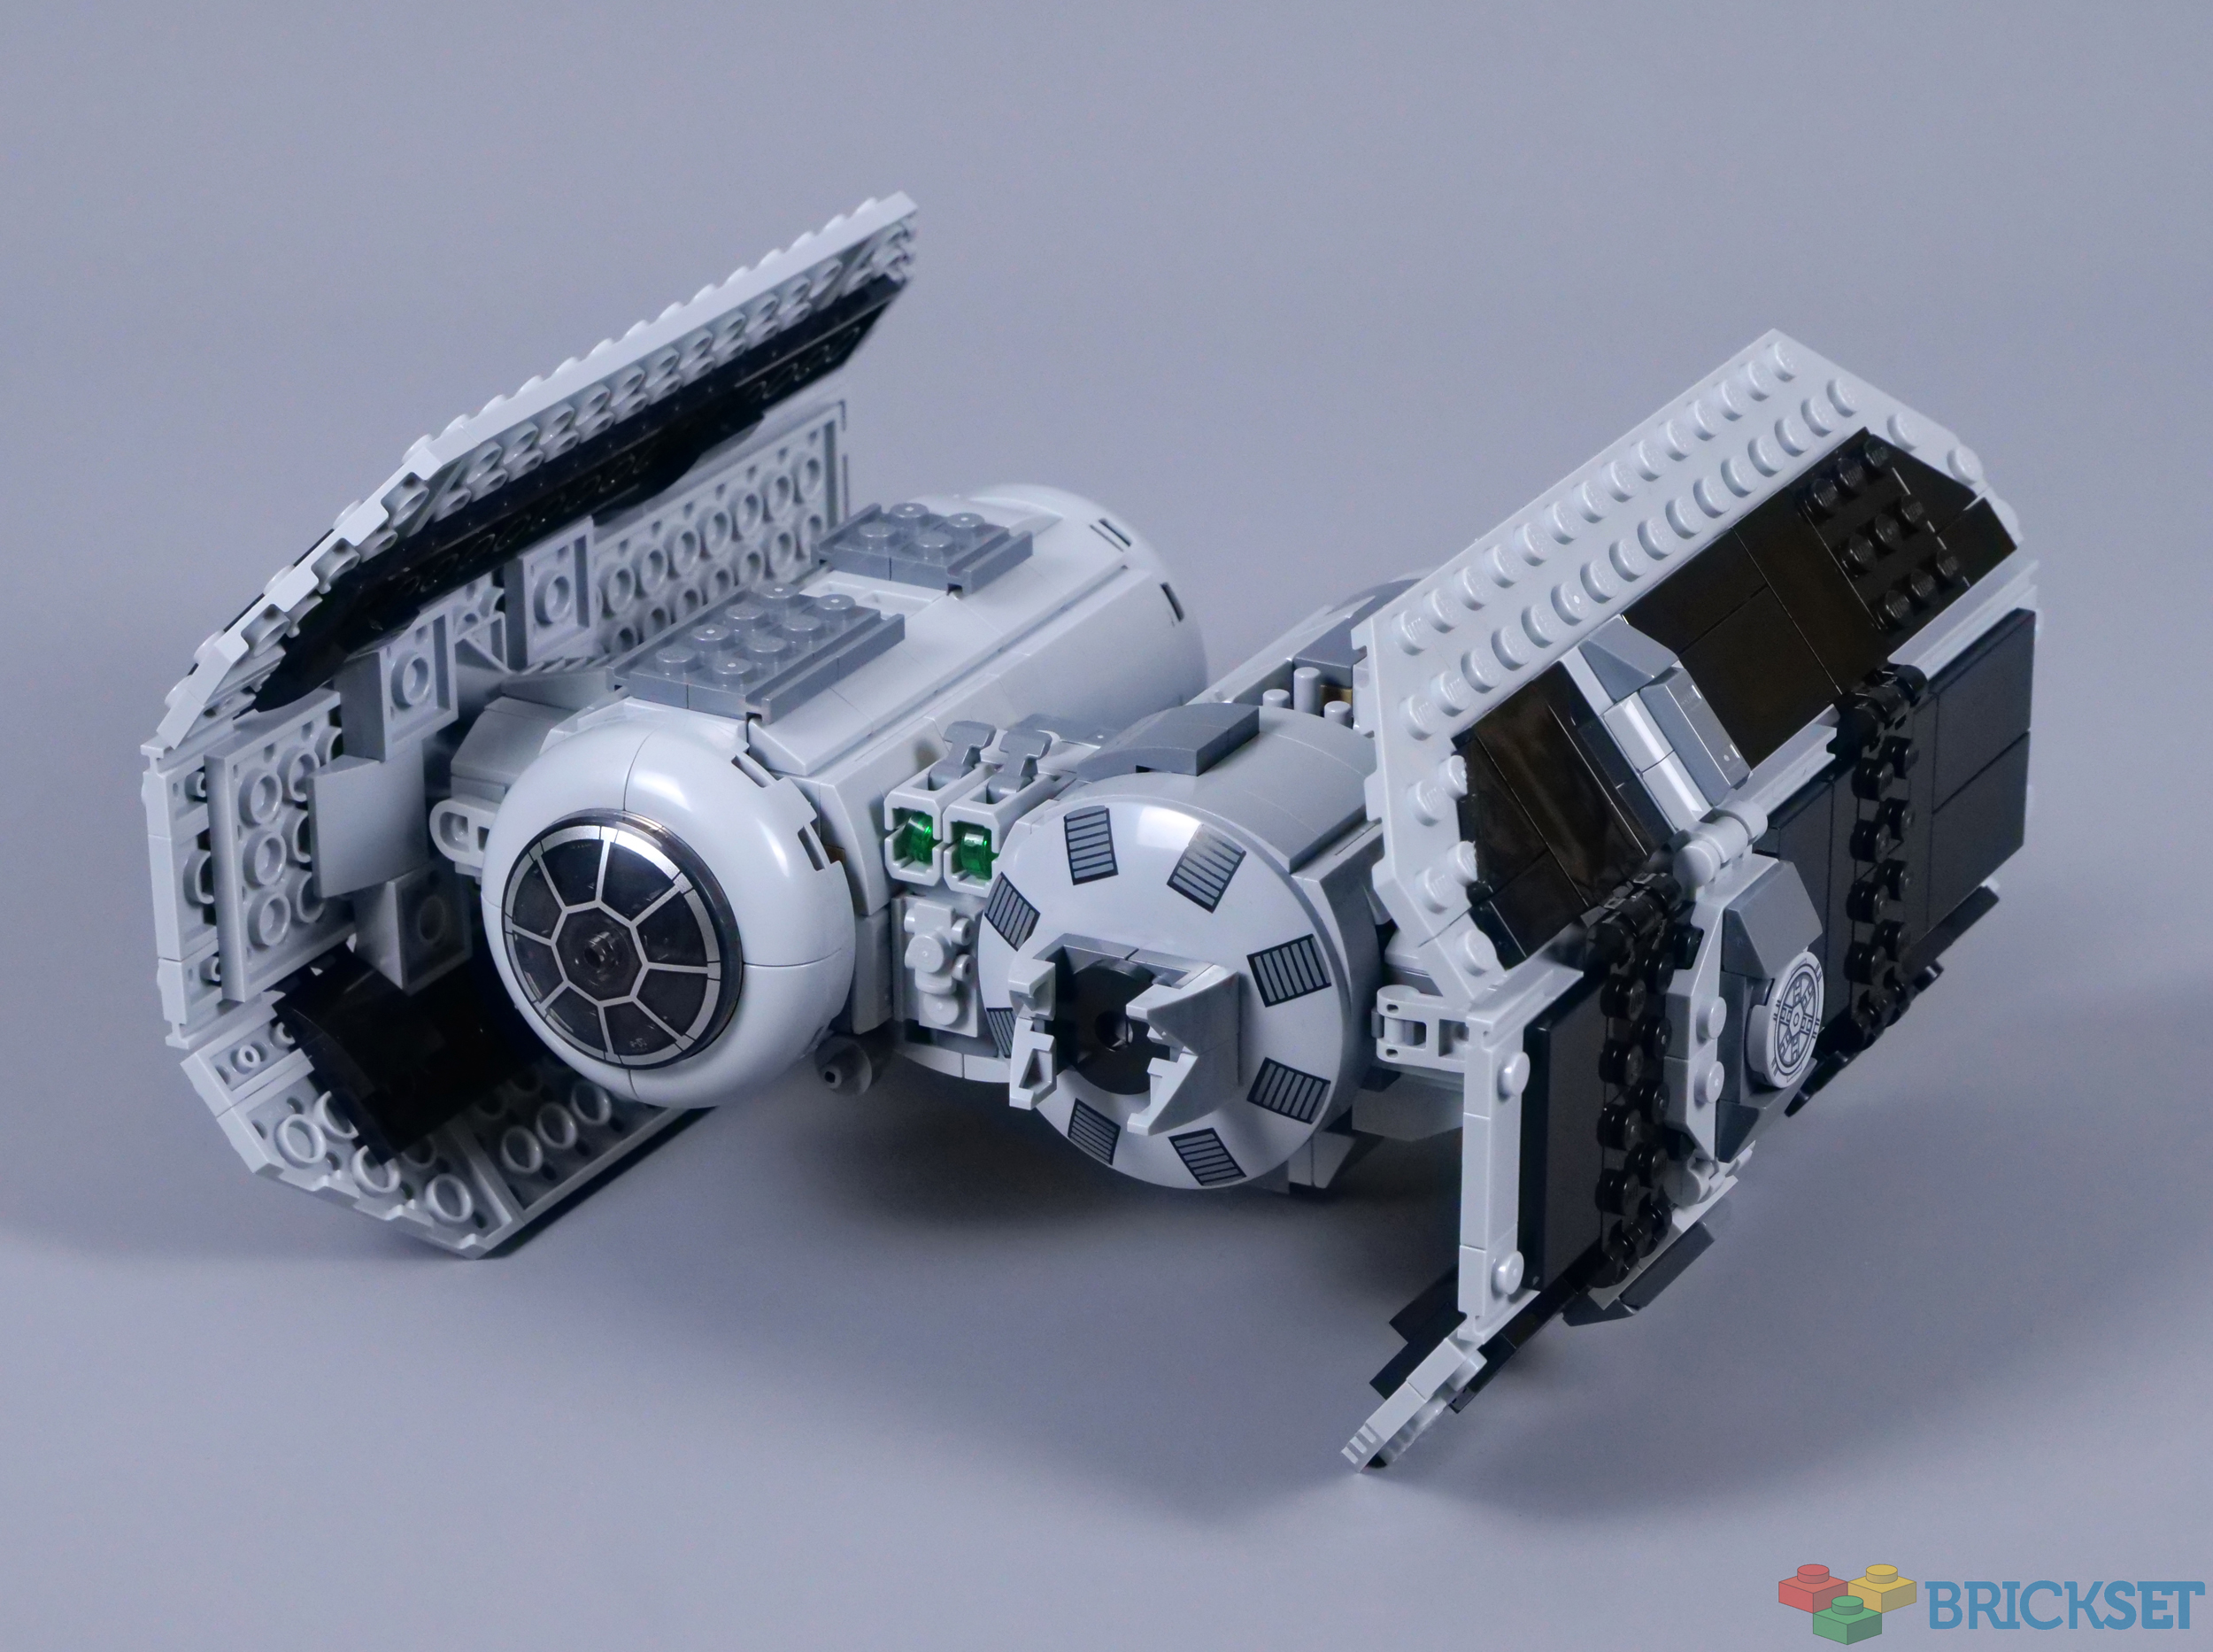 LEGO 75347 Star Wars TIE Bomber